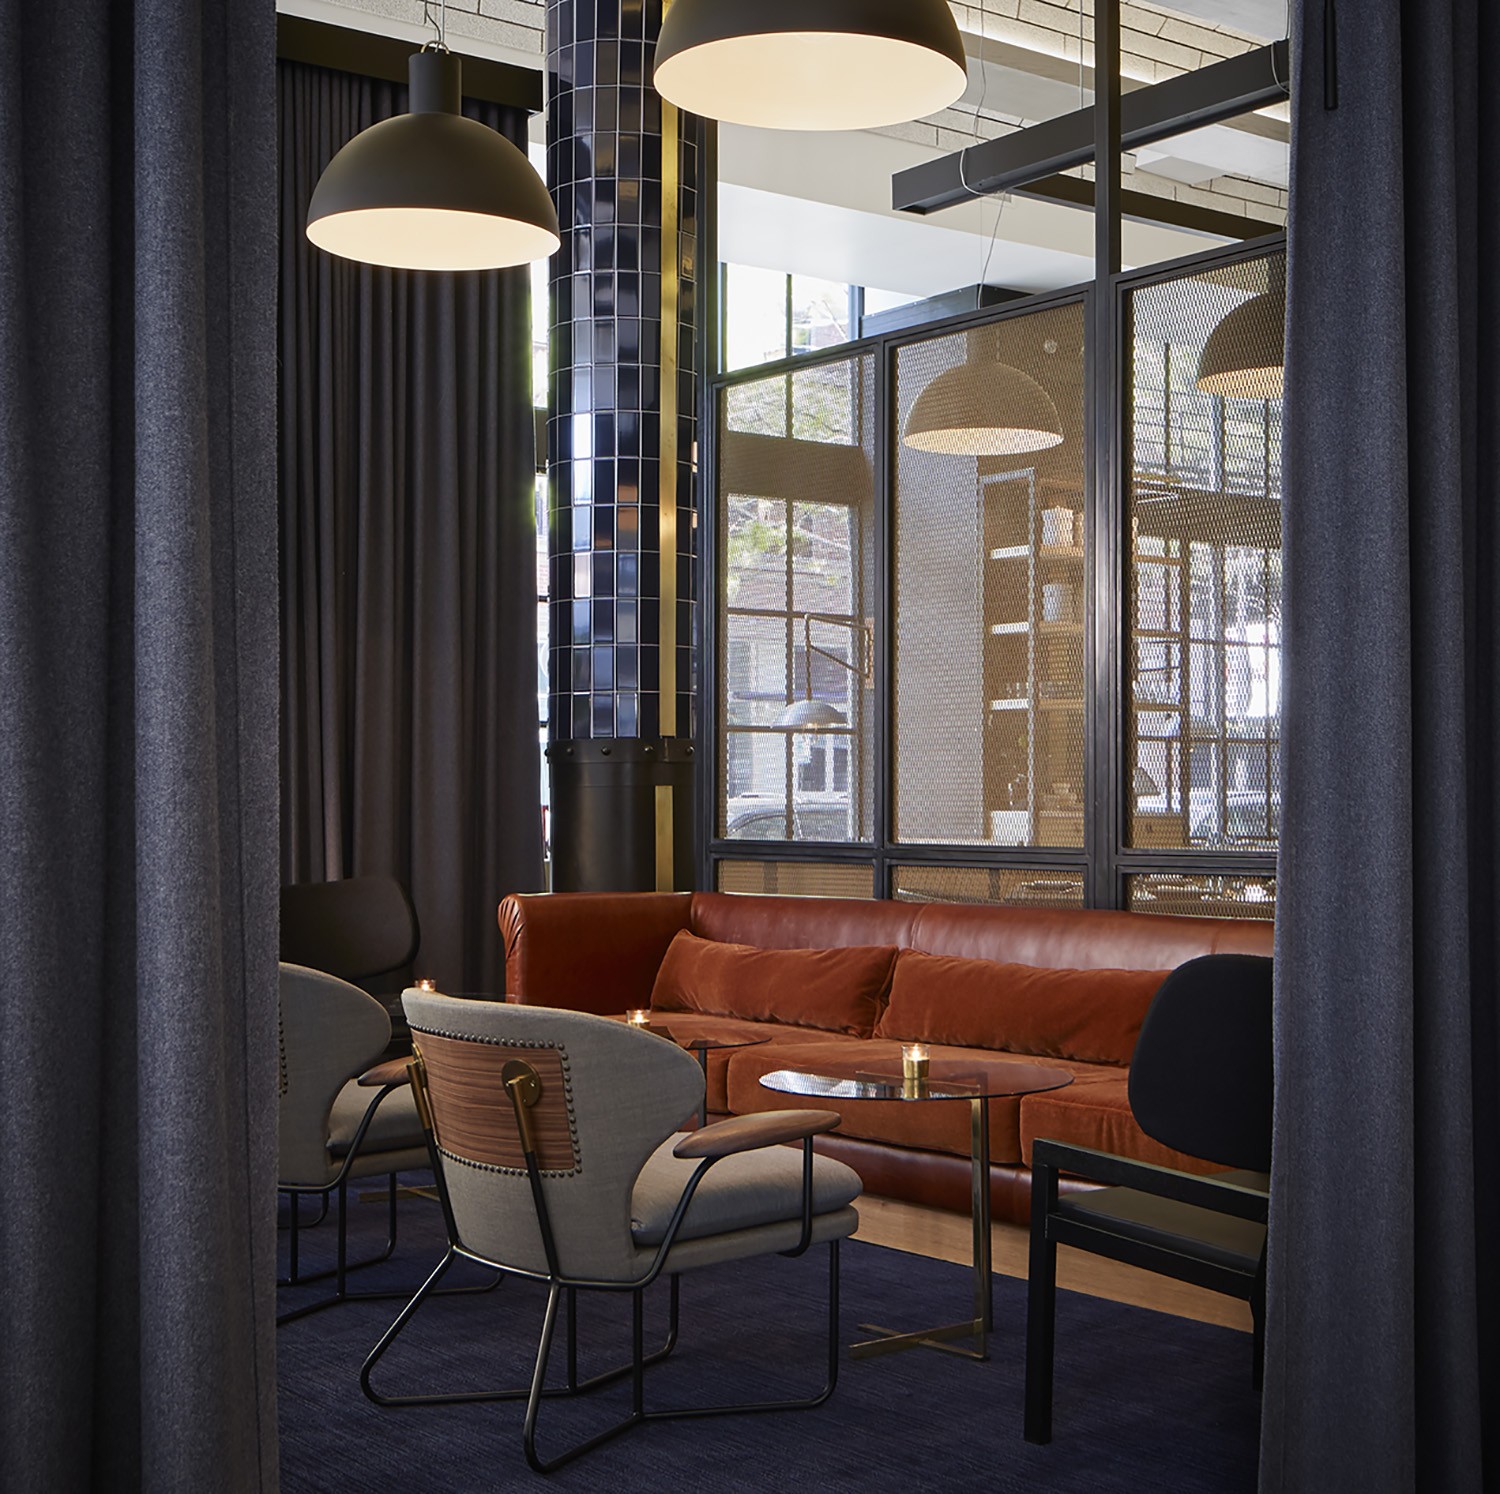 lounge proxi restaurant with juniper's custom lighting